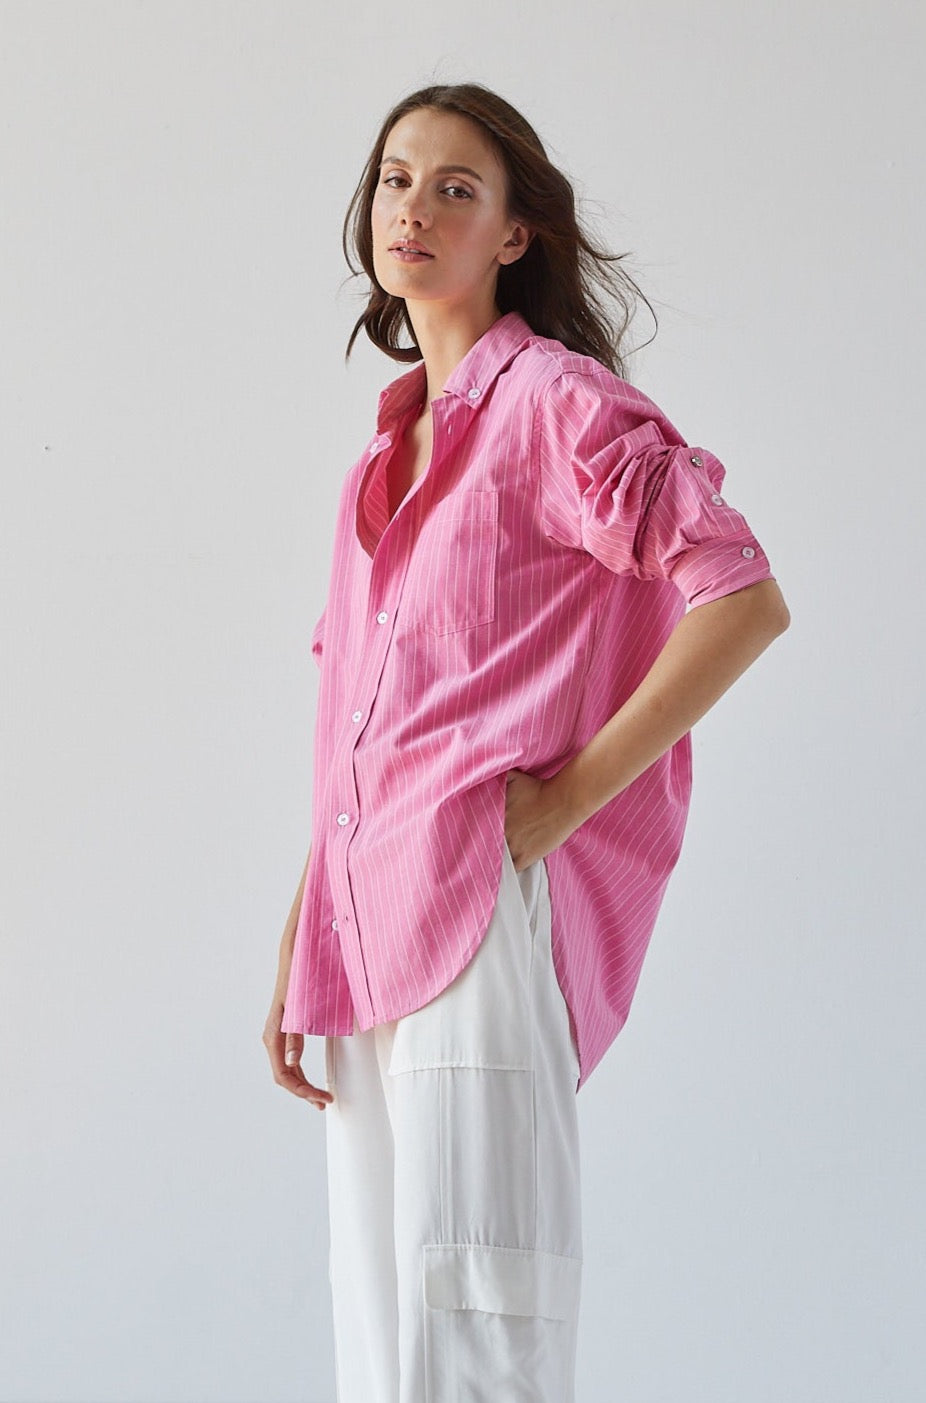 Adroit Atelier Kean Boyfriend Striped Button Down Shirt - Bubblegum